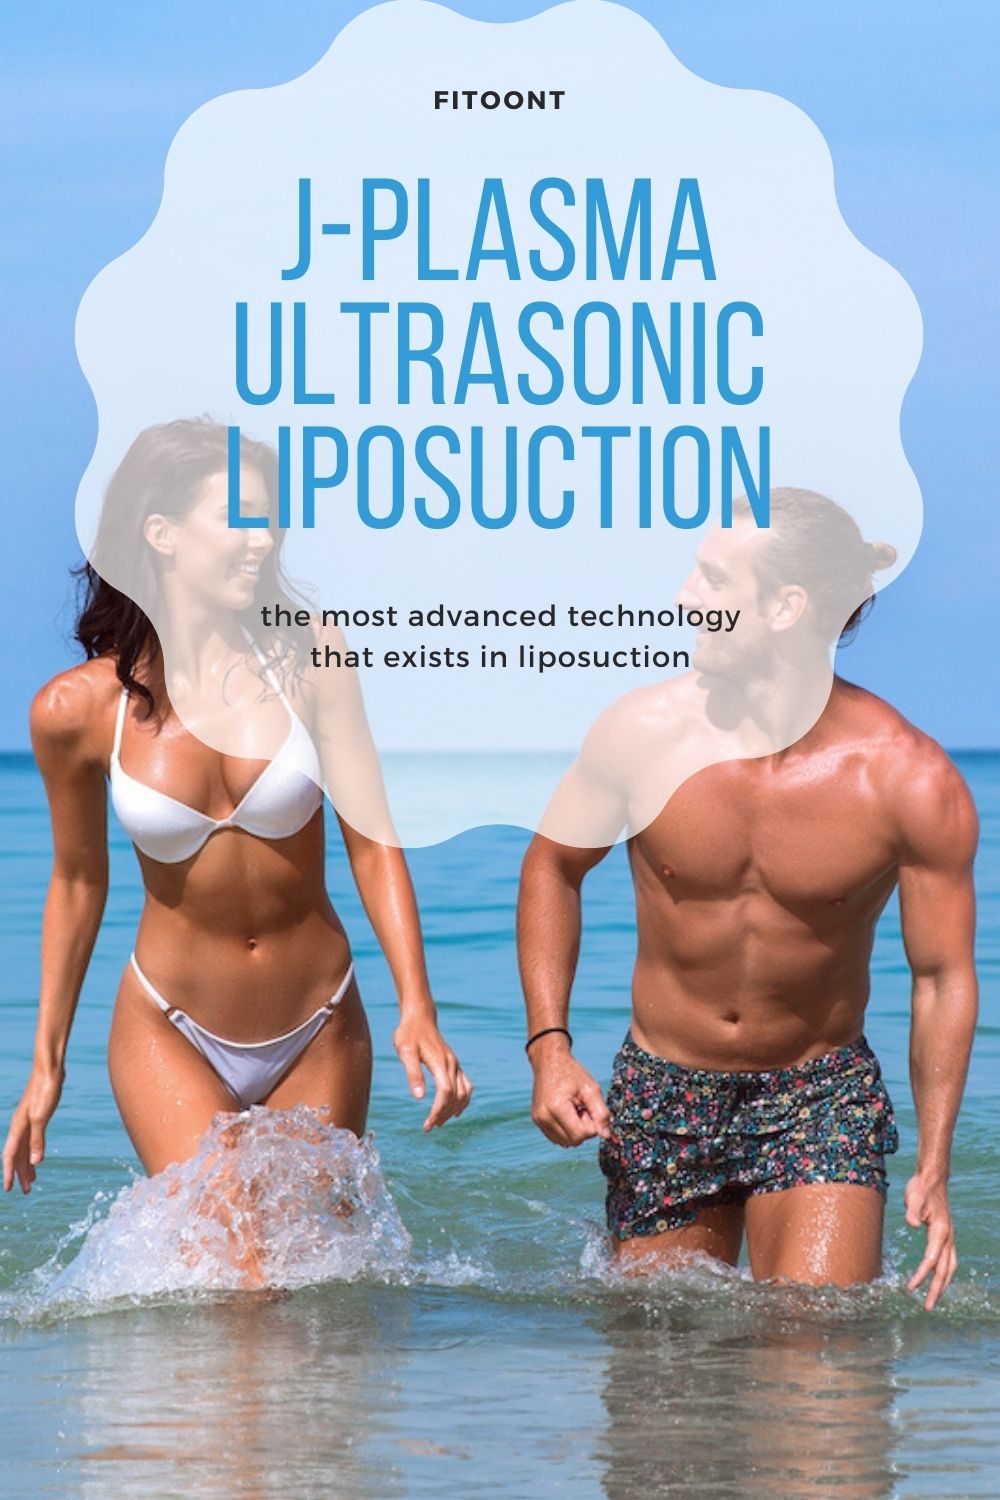 j-plasma ultrasonic liposuction